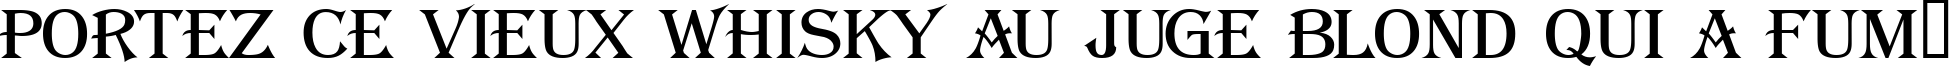 Пример написания шрифтом a_Algerius текста на французском